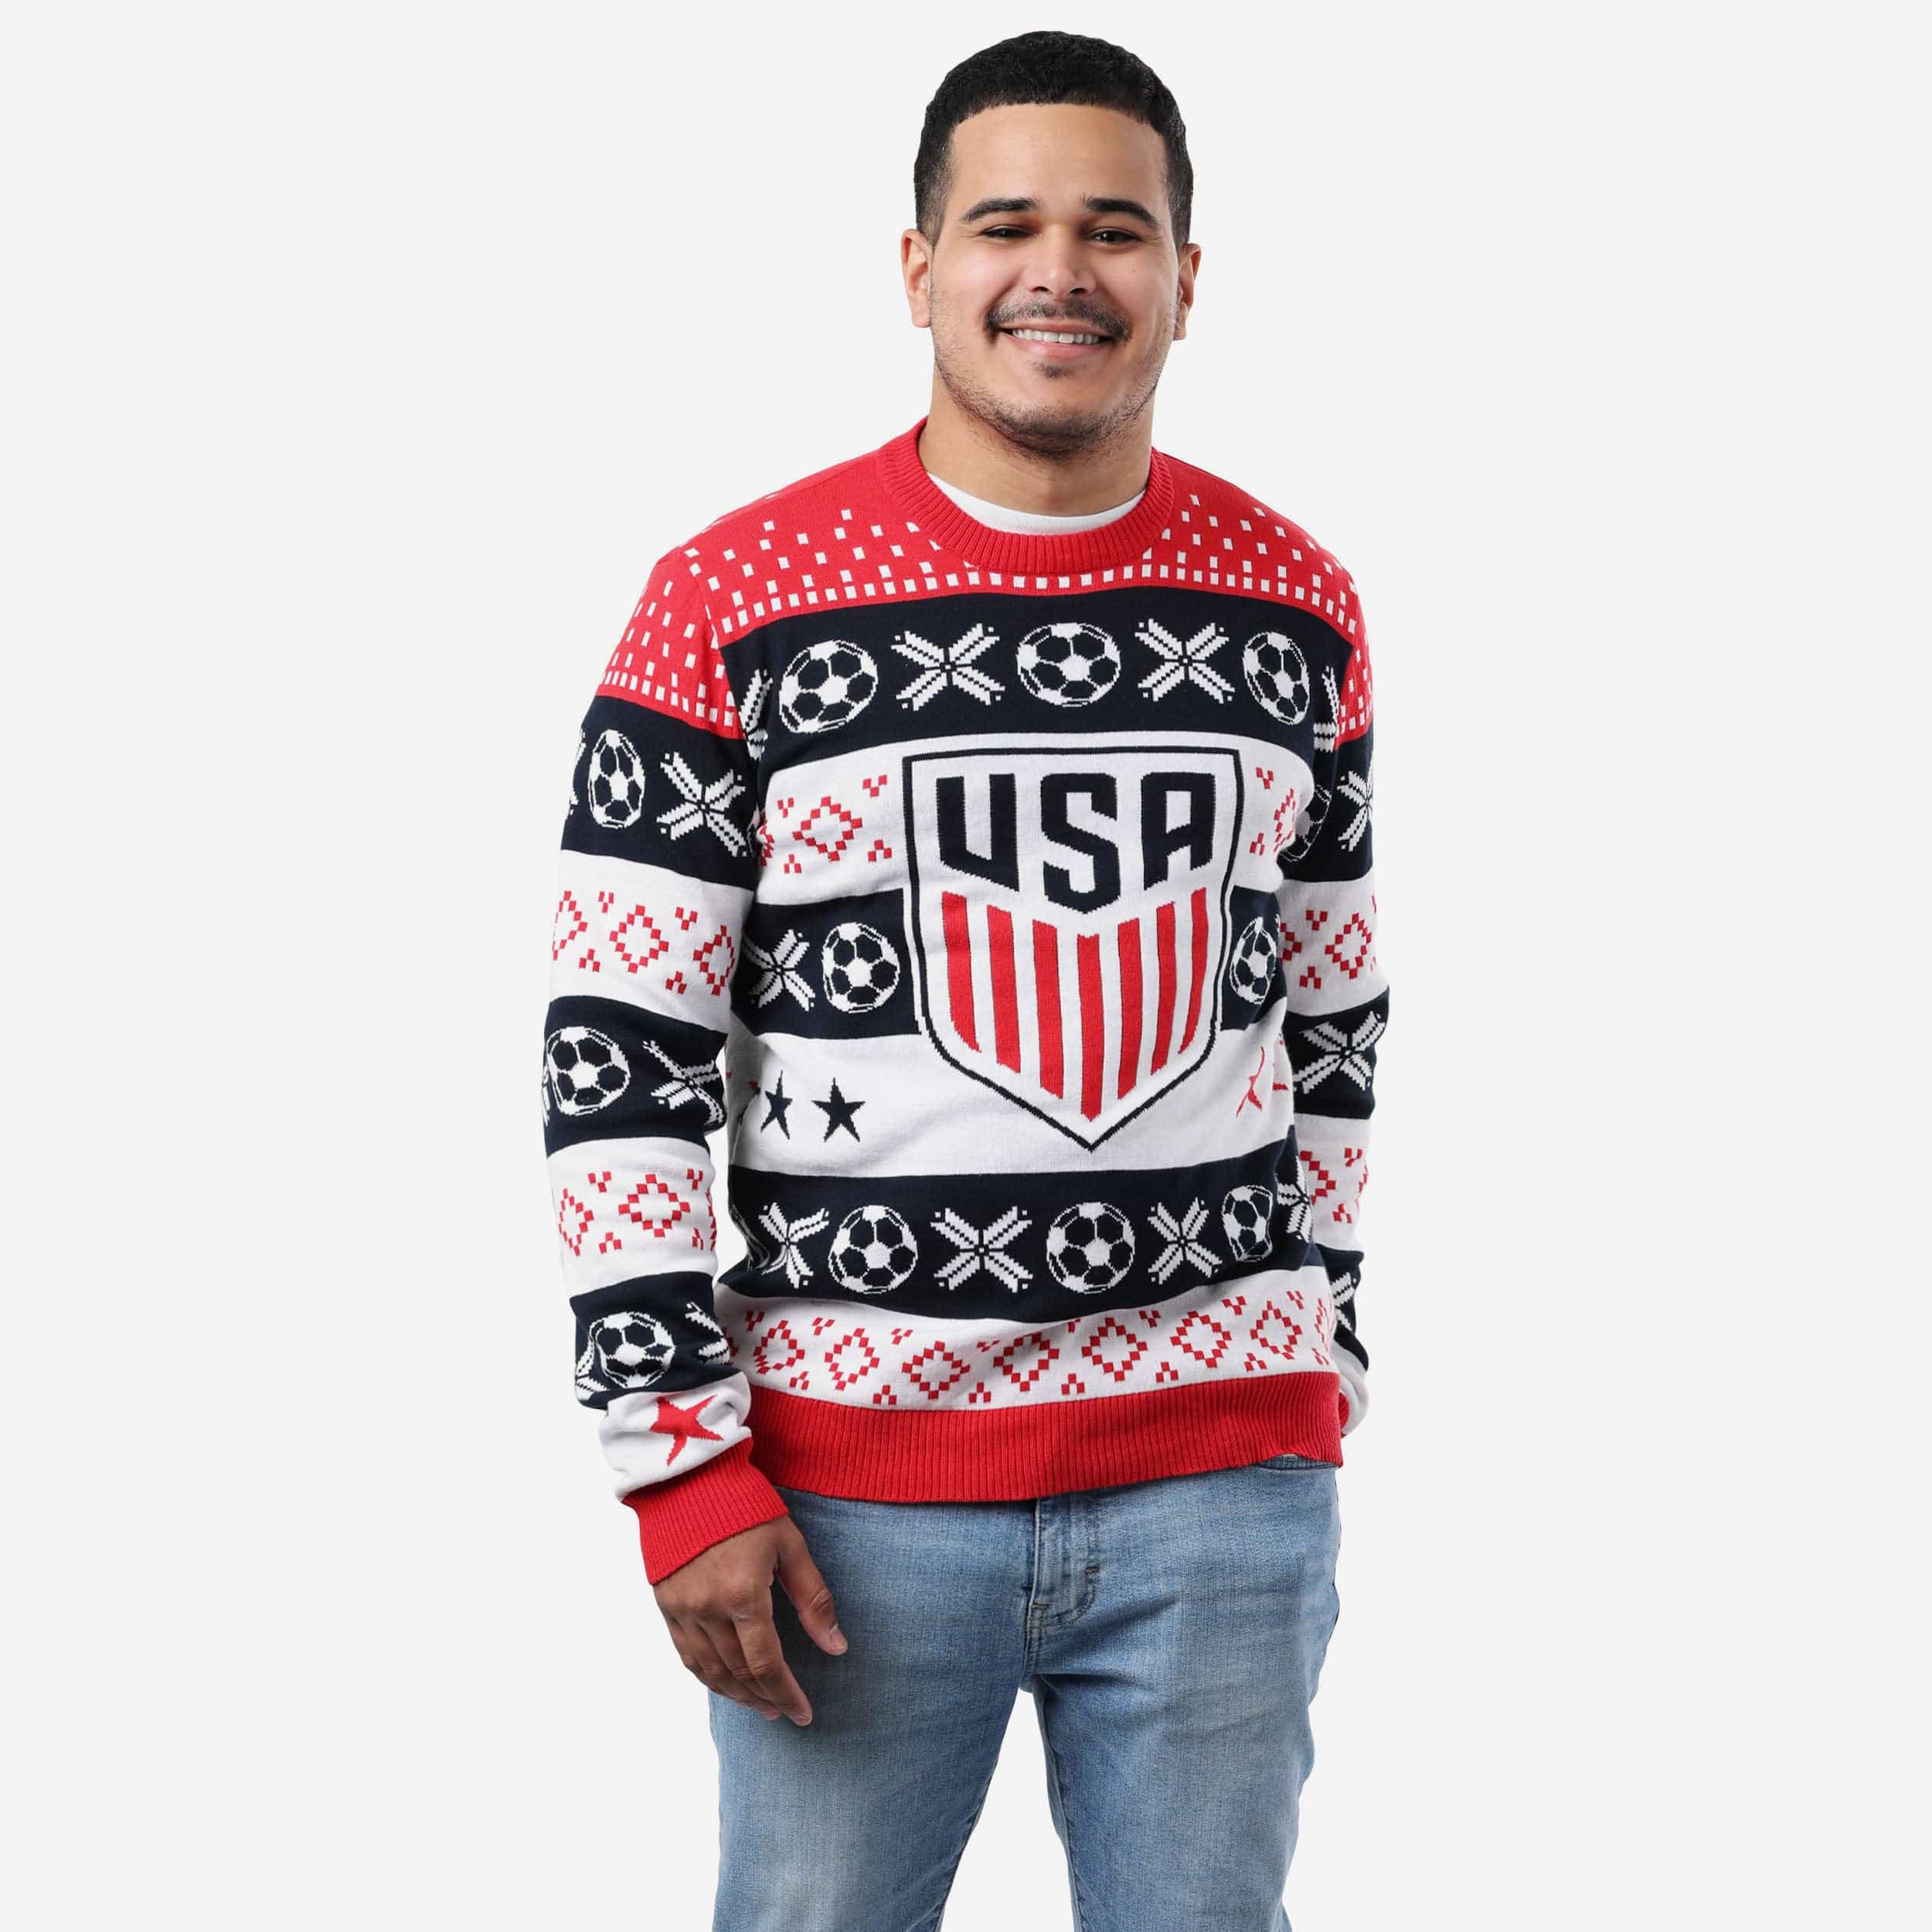 FOCO USA Mens Soccer Cotton Knit Sweater - S - Men